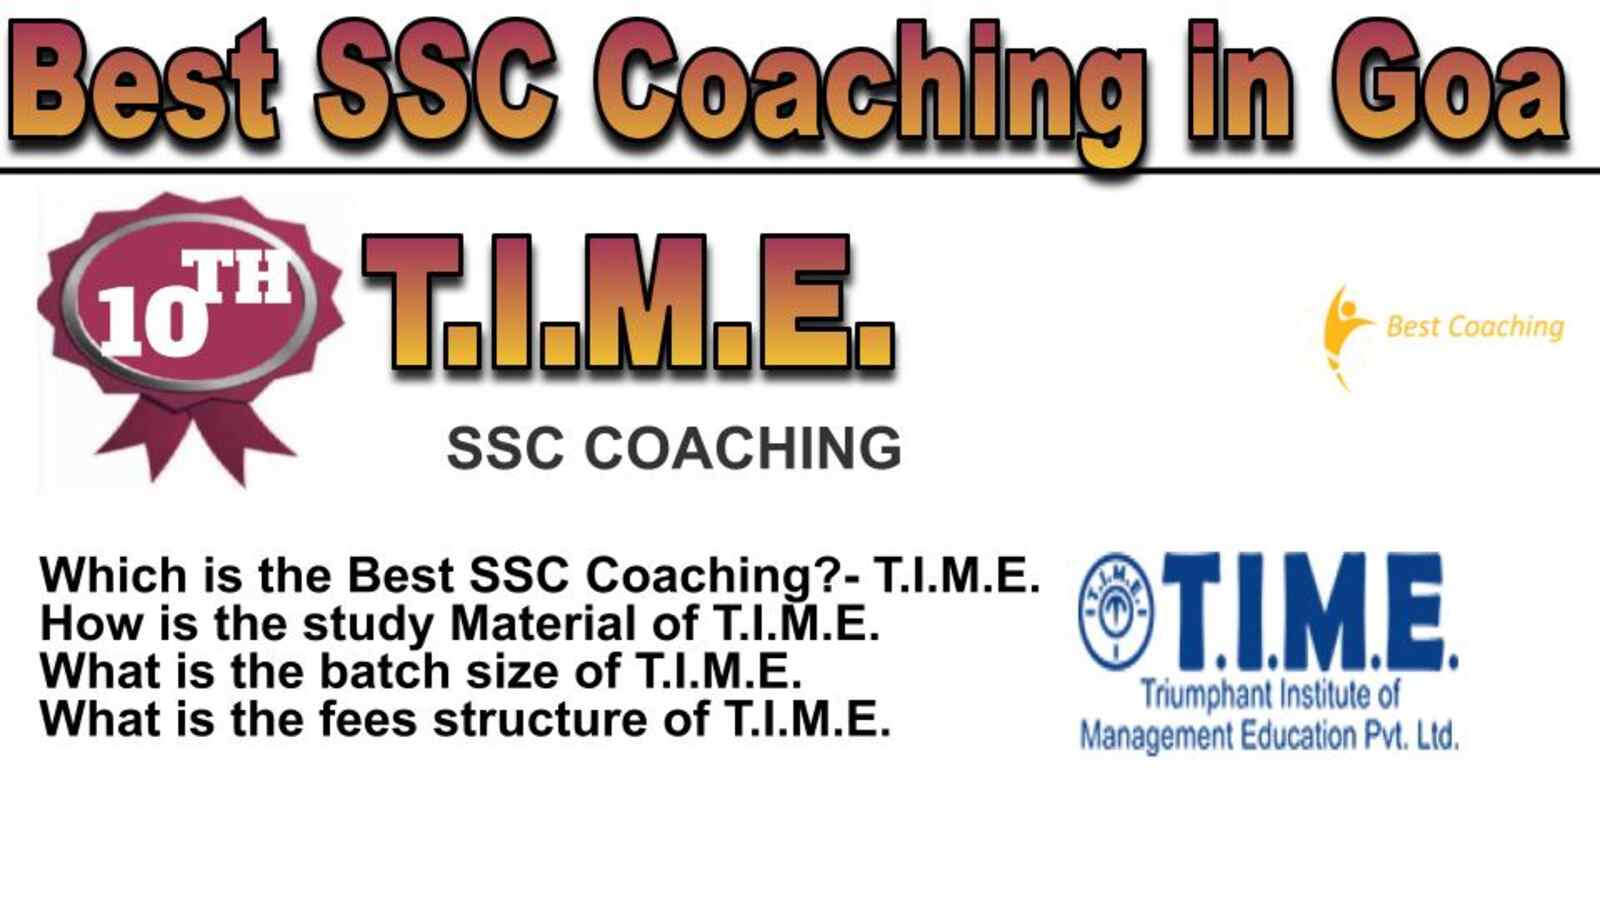 Rank 10 best SSC coaching in Goa